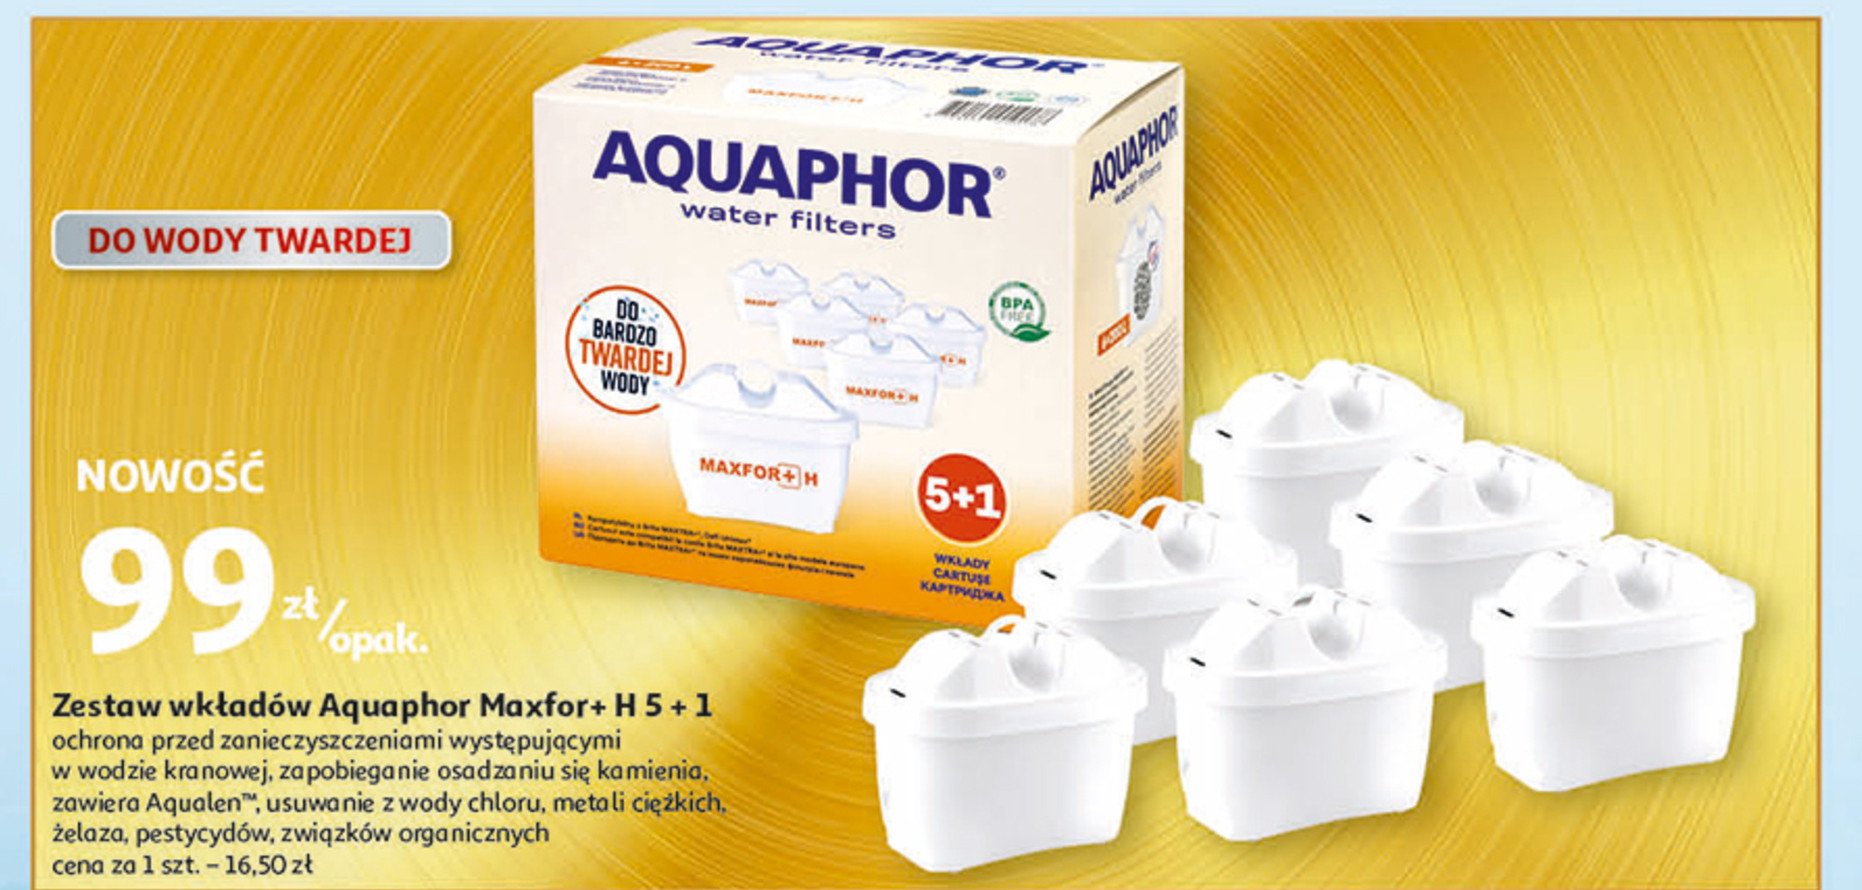 Wkład b100-25 maxfor Aquaphor promocja